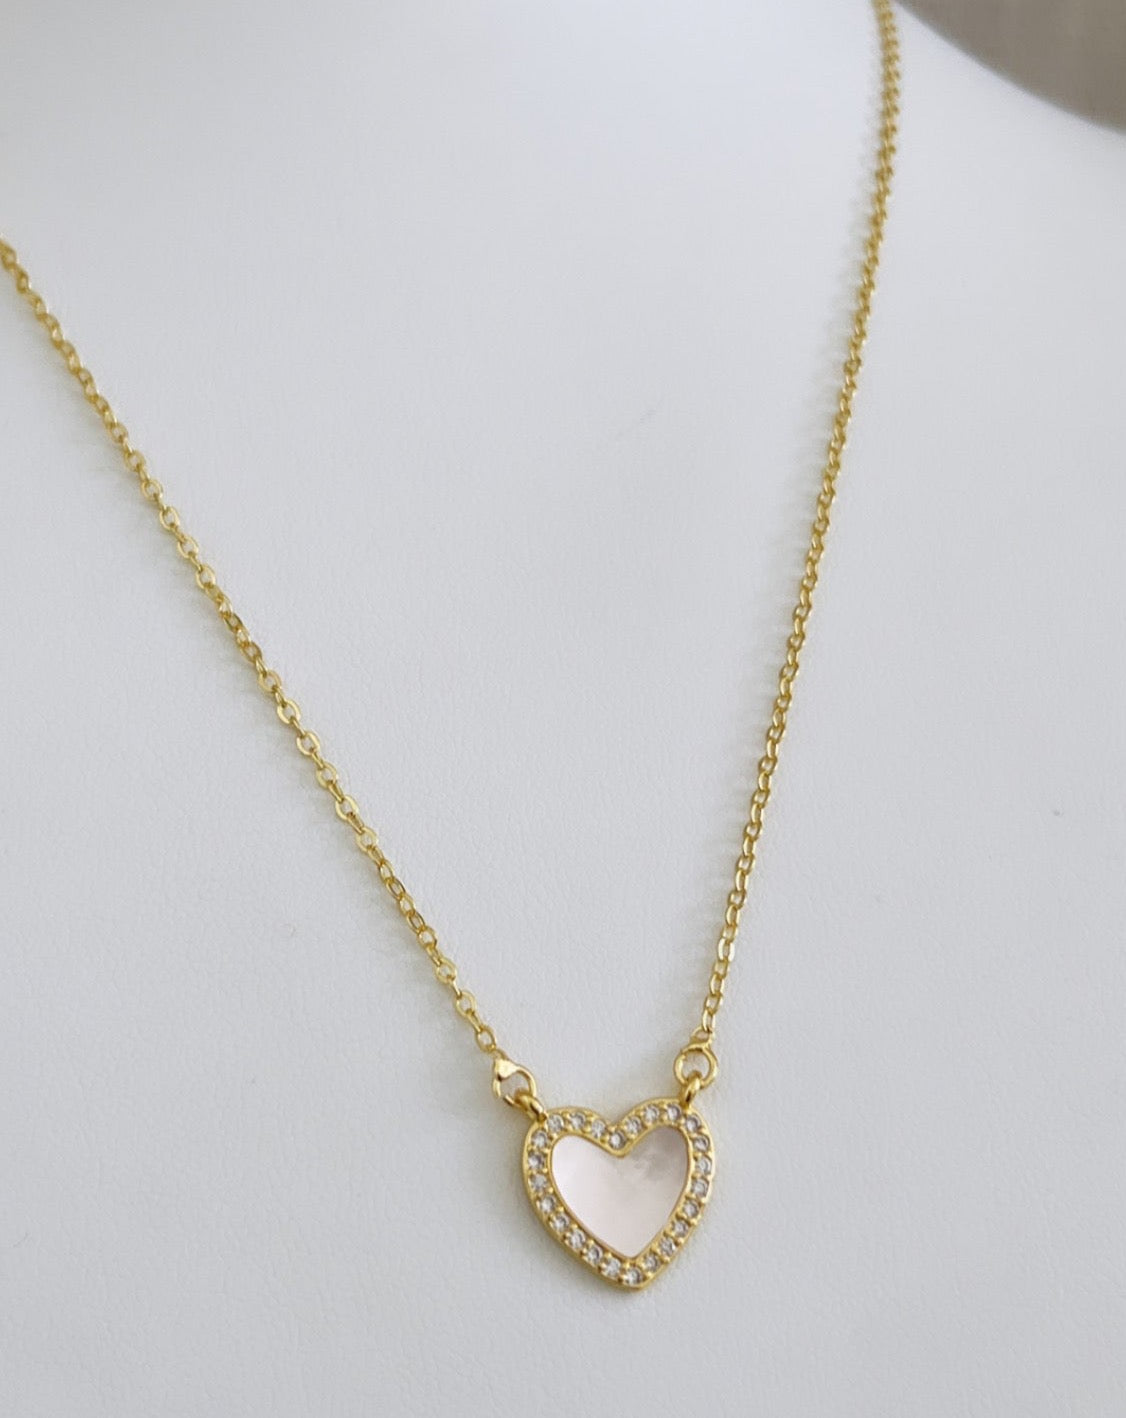 Heart Nacre Necklace